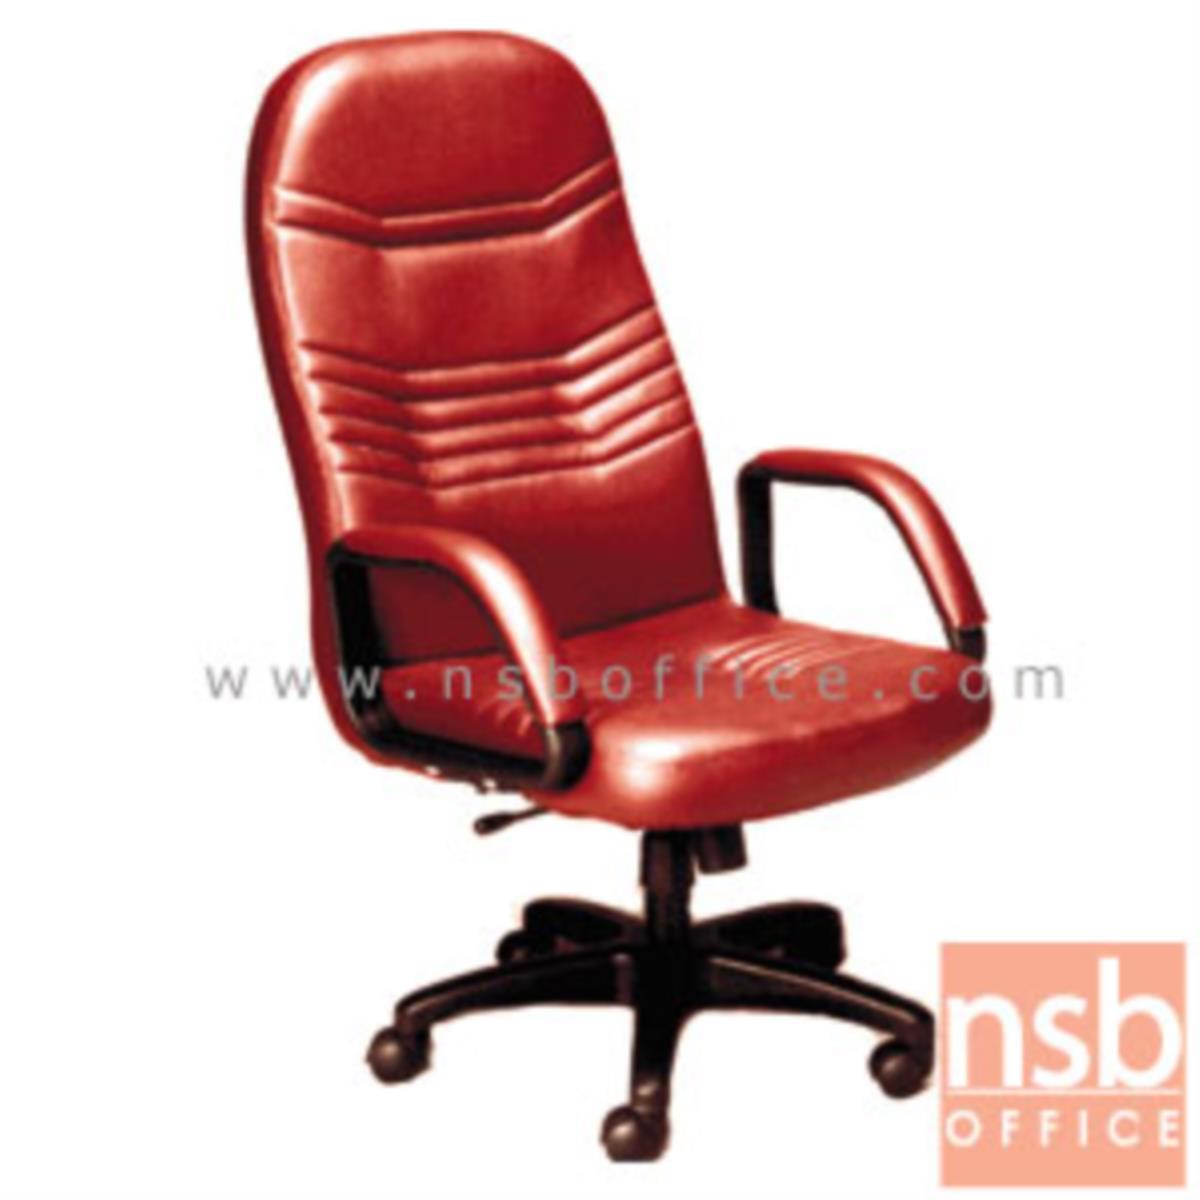 B01A366:เก้าอี้ผู้บริหาร รุ่น Delbert (เดลเบิร์ต)  โช๊คแก๊ส มีก้อนโยก ขาพลาสติก